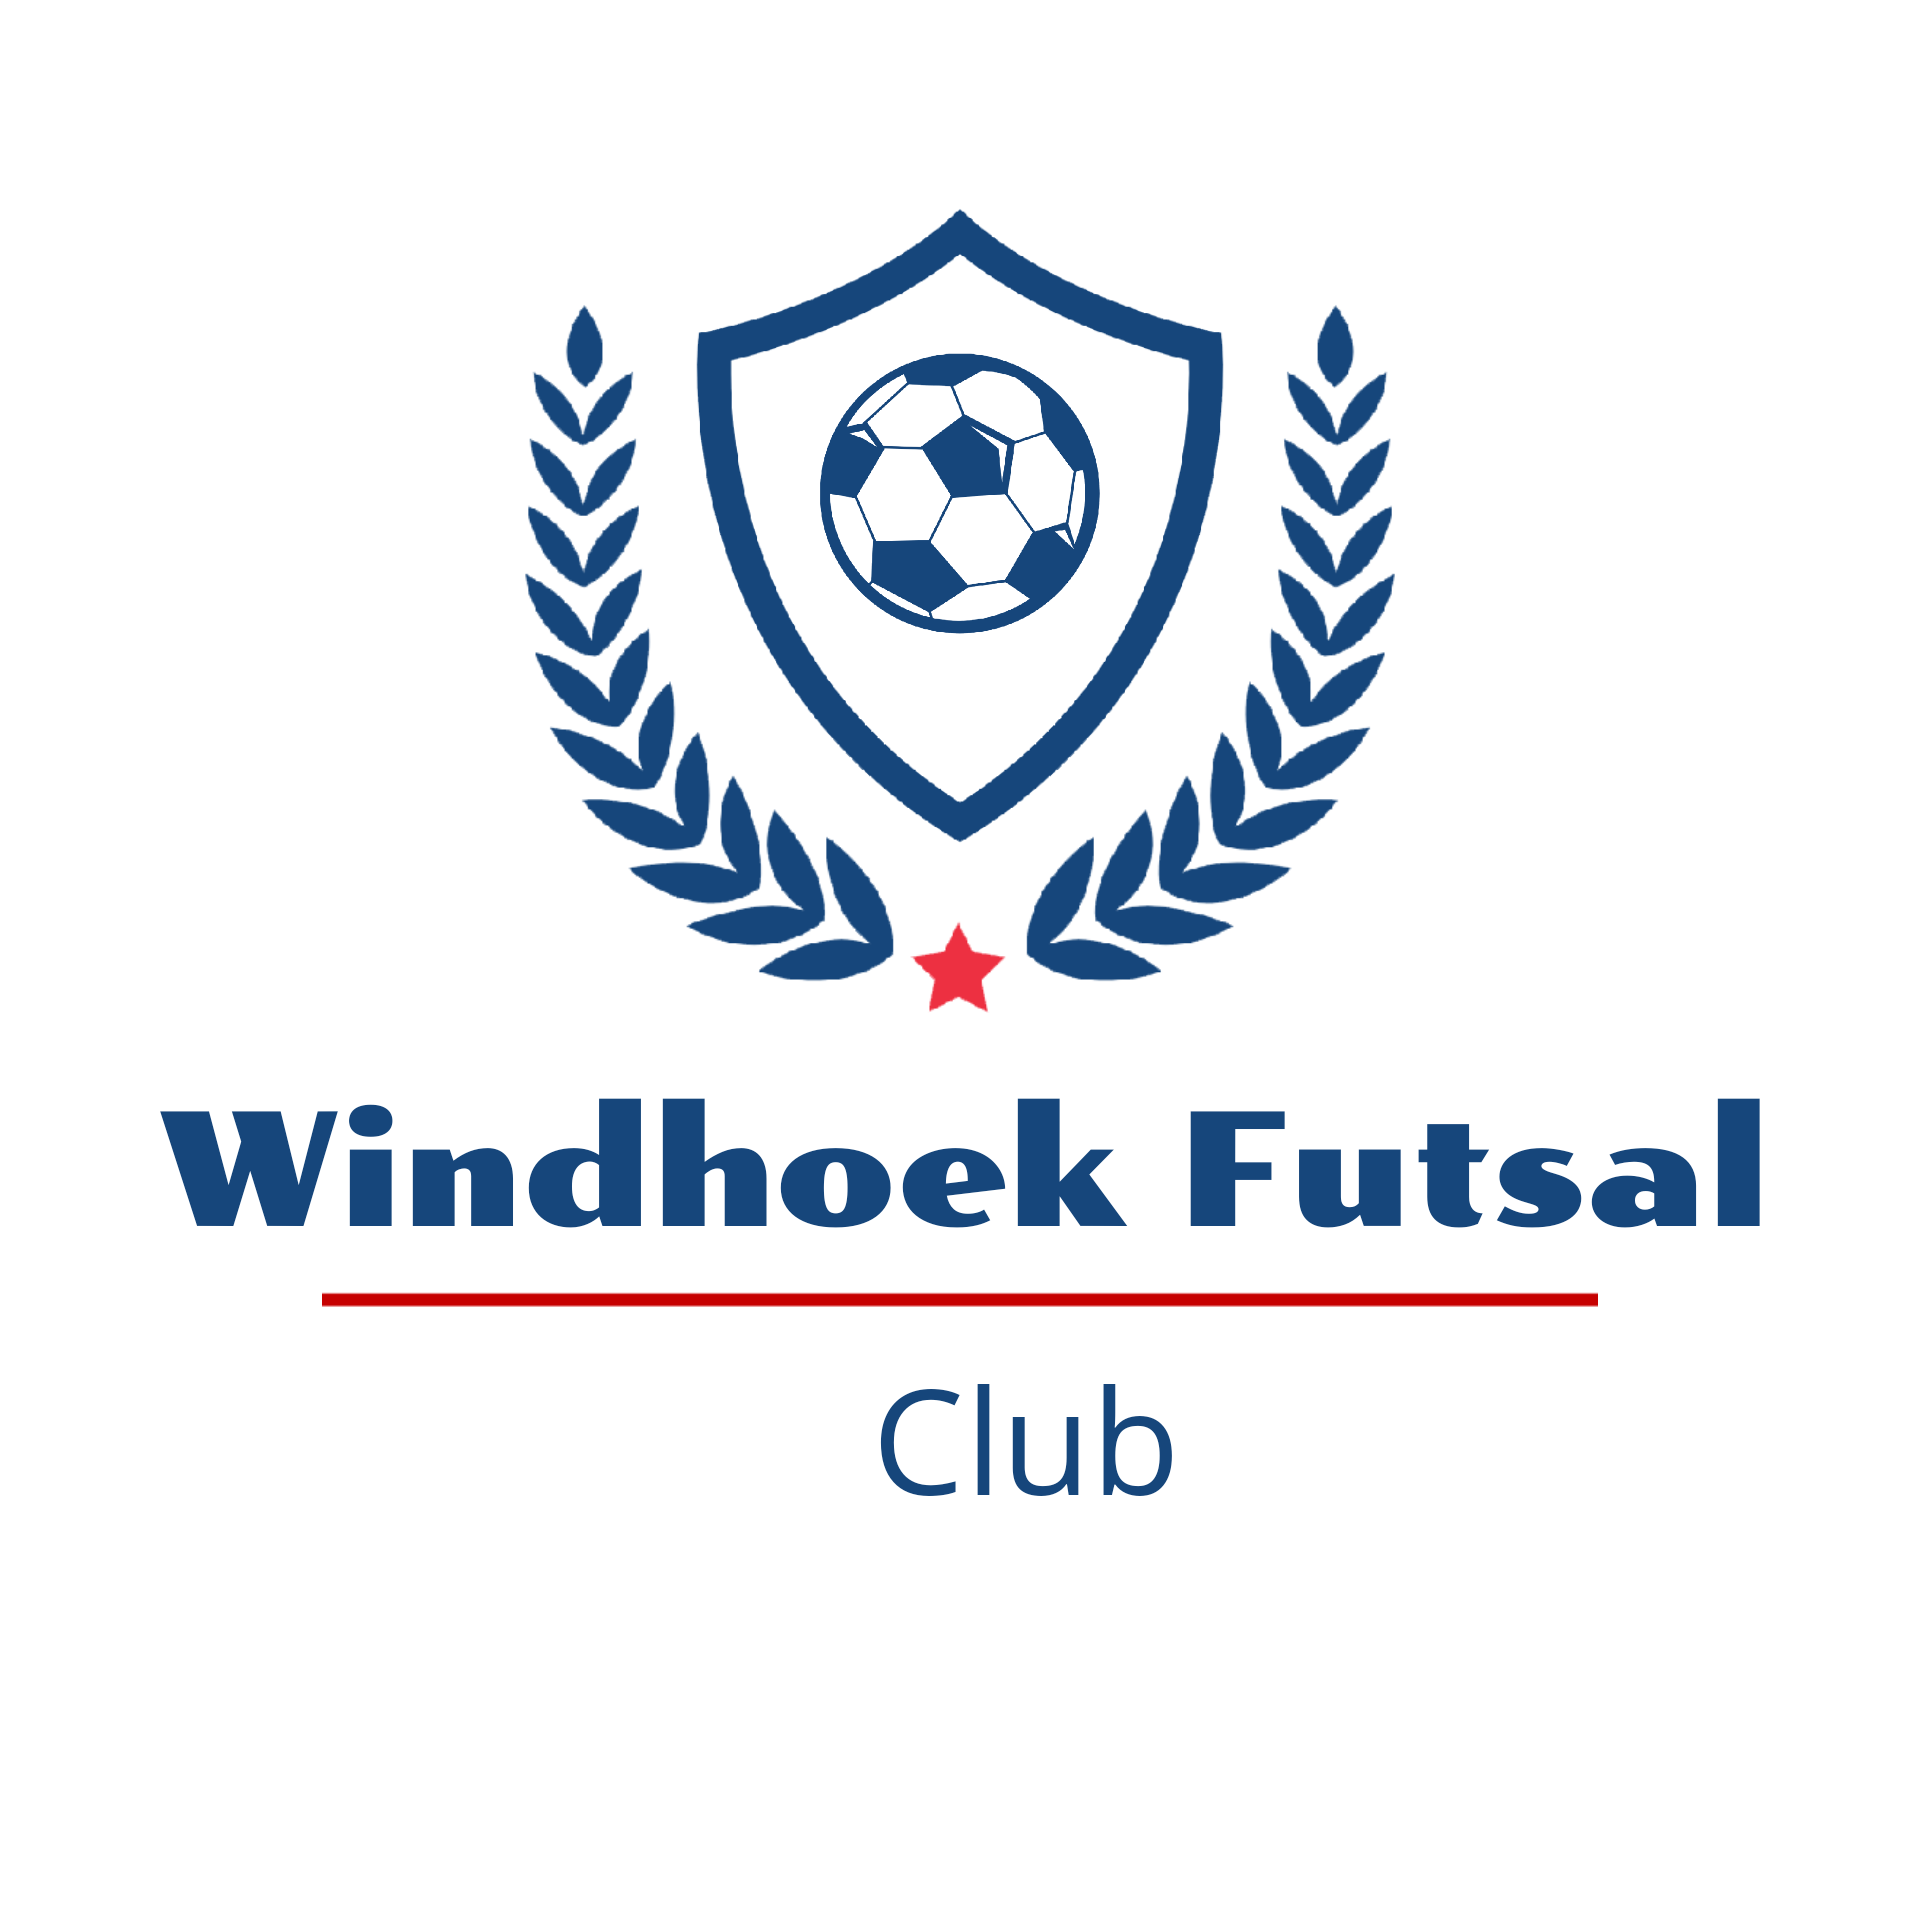 Windhoek Futsal Club